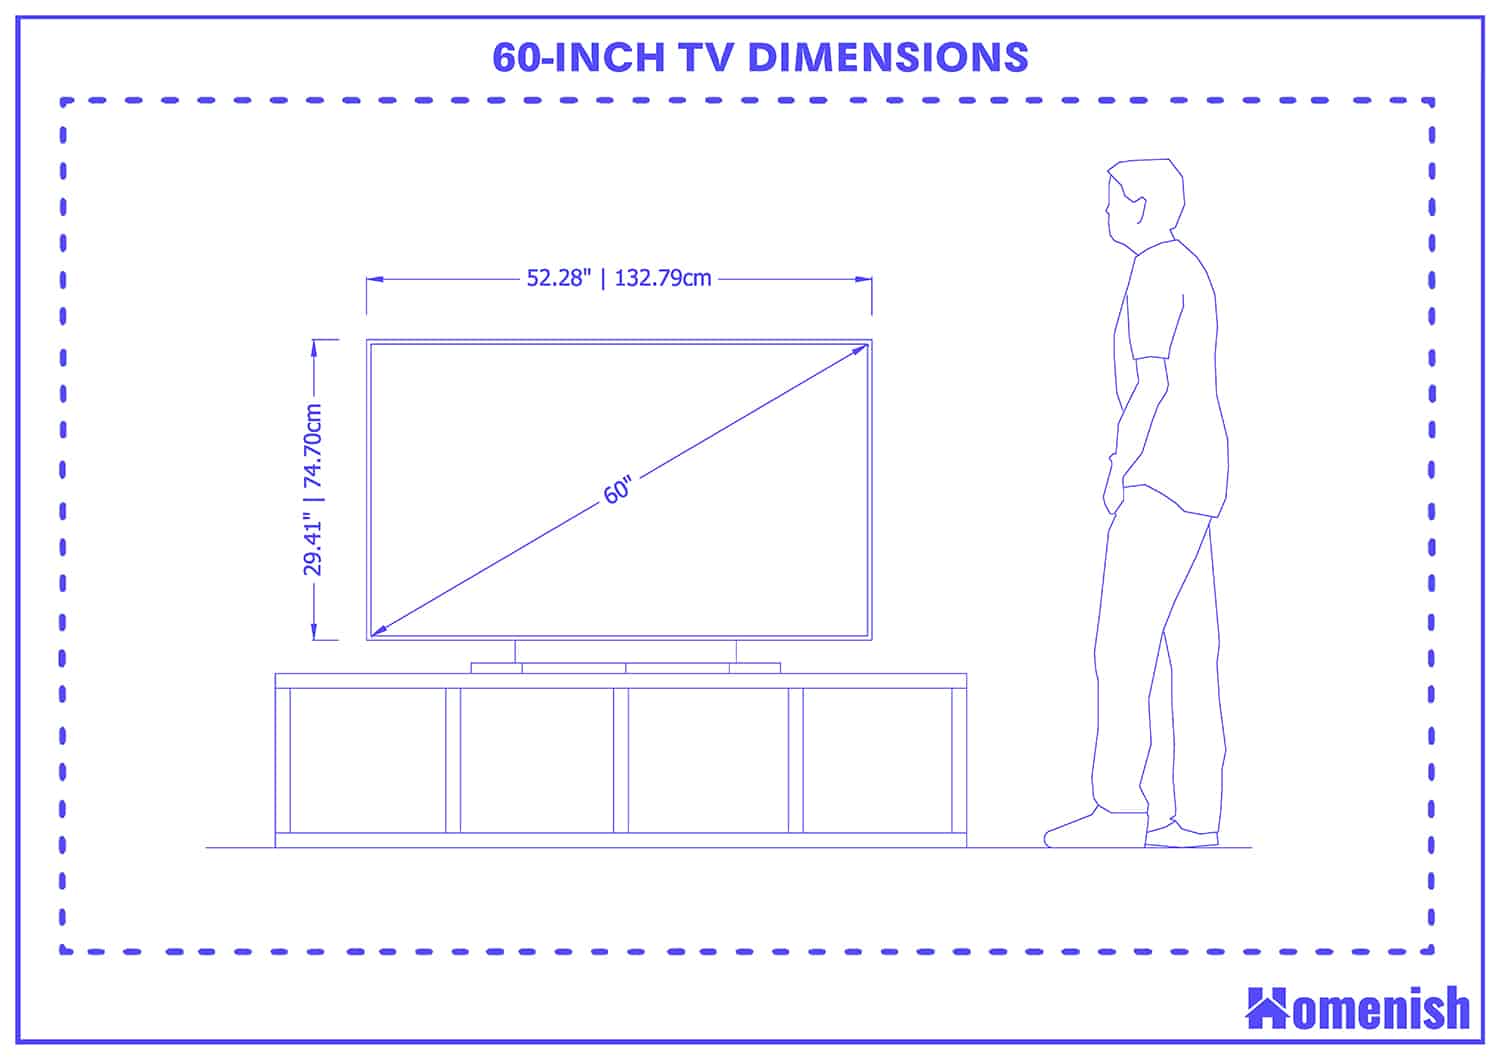 60-Inch TV Dimensions